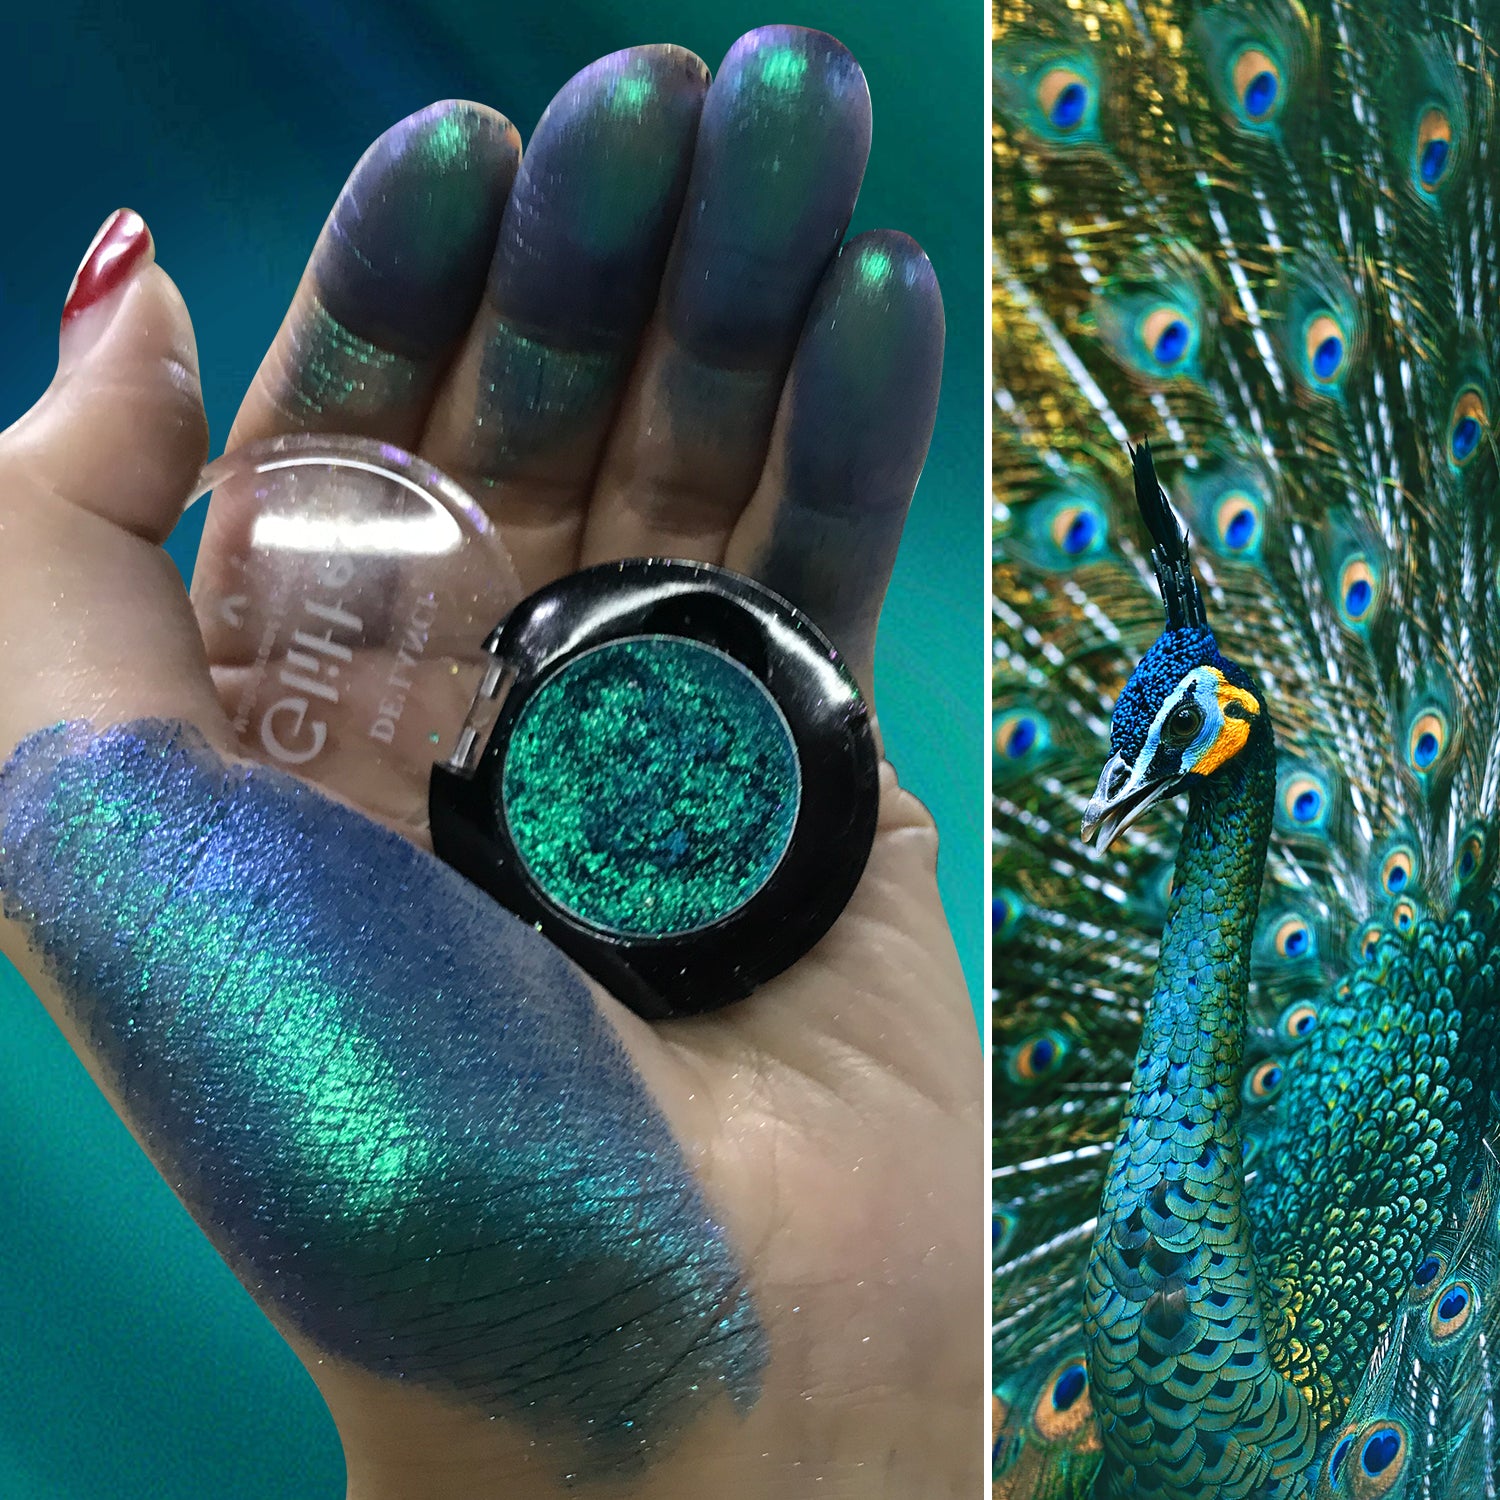 DE'LANCI Glitter Eye Shadow Makeup Professional Chameleon Eyeshadow  Pigment, Holographic Multichrome Flakes+Loose Glitter Powder, Neon Duo  Chrome